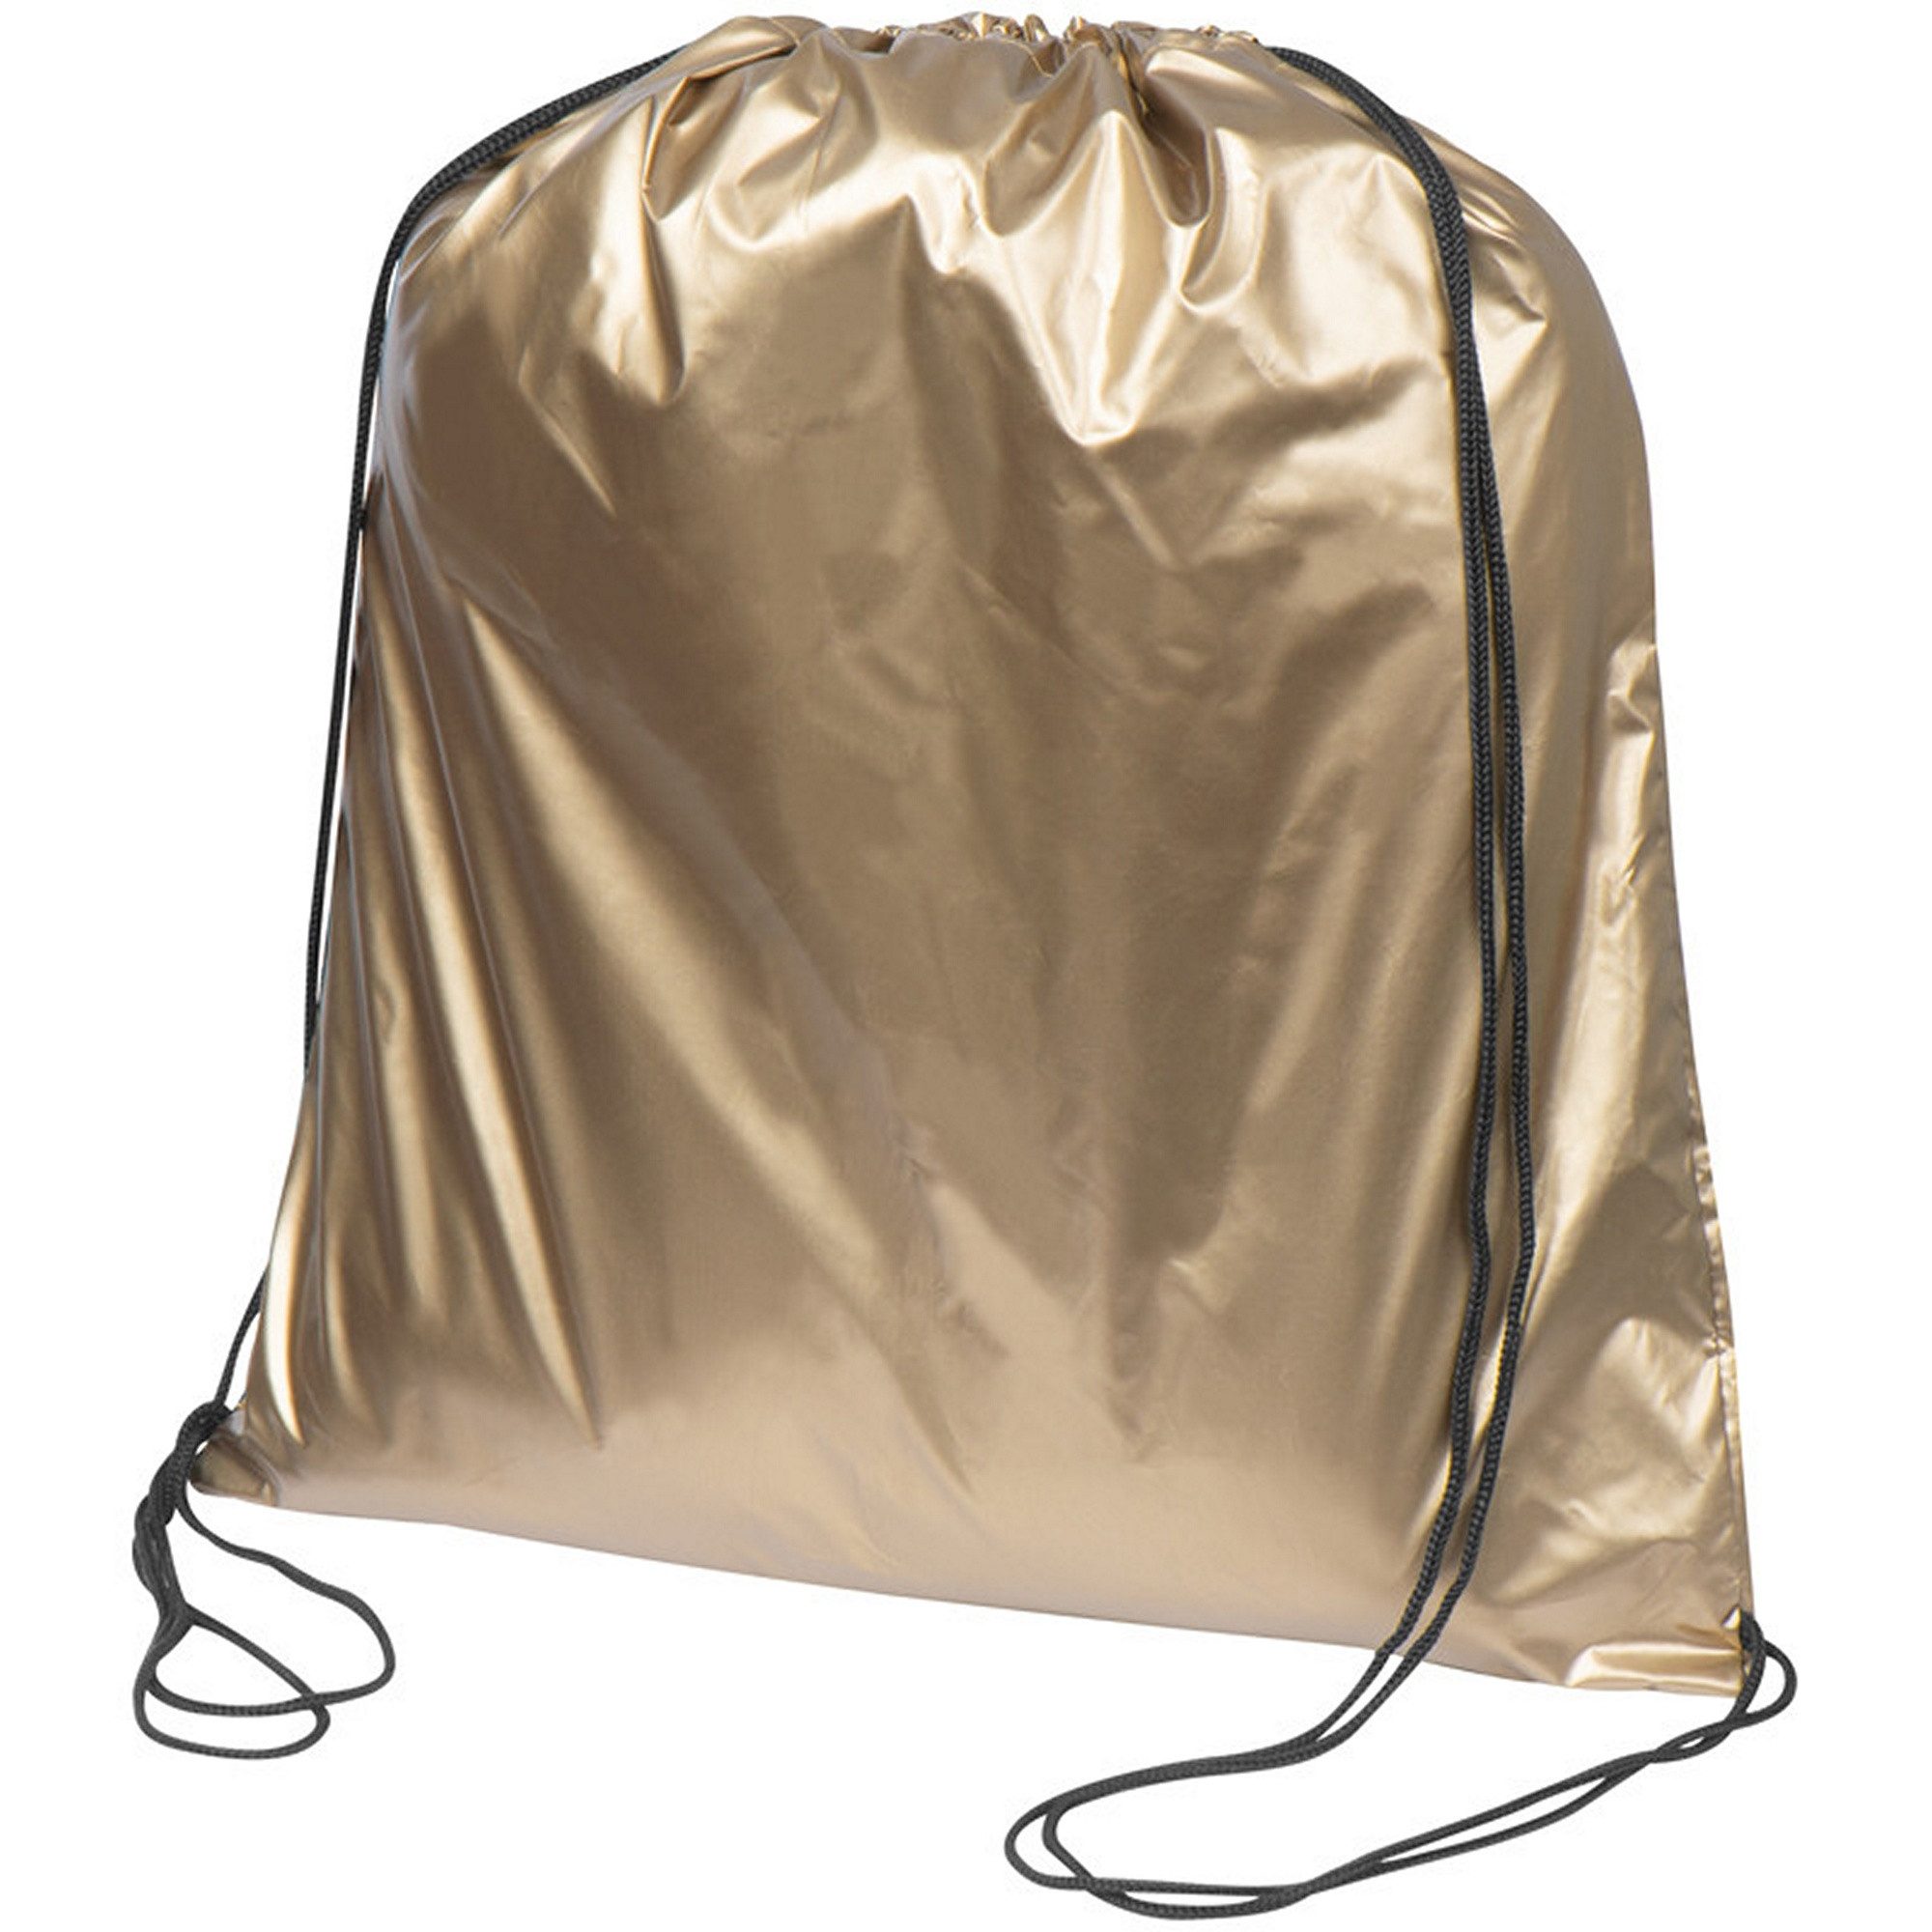 Livepac Office Gymbag Gymbag / Sportbeutel / Turnbeutel aus Polyester / Farbe: metallic gold